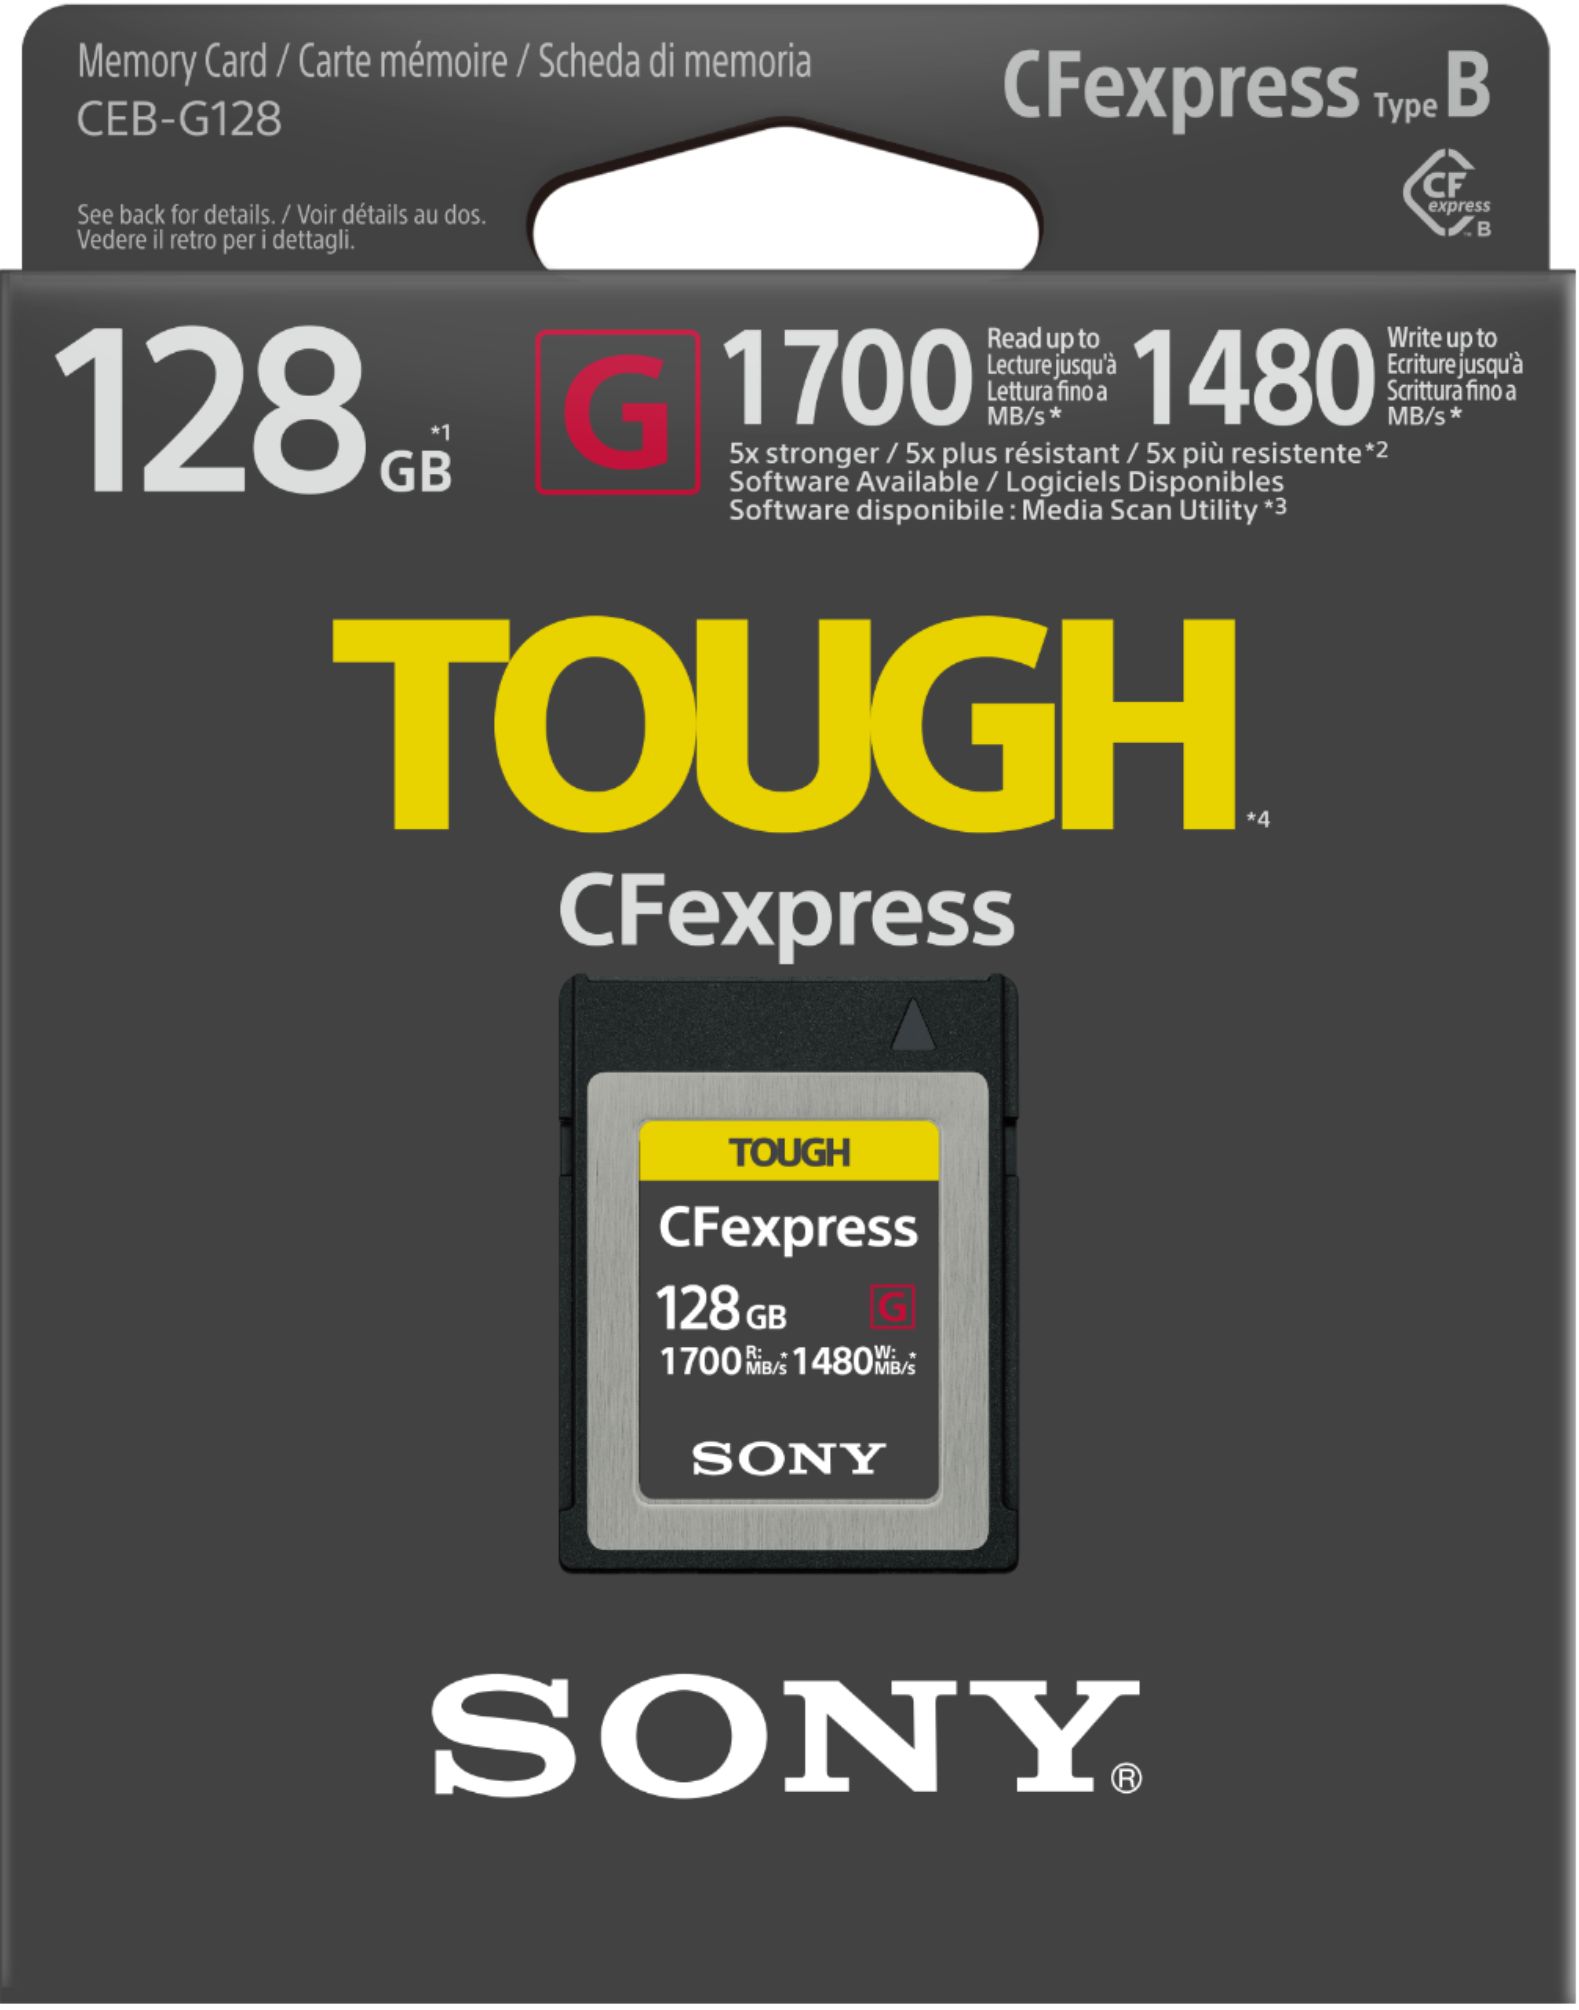 Sony TOUGH G Series 128GB CFexpress Memory Card CEBG128/J - Best Buy